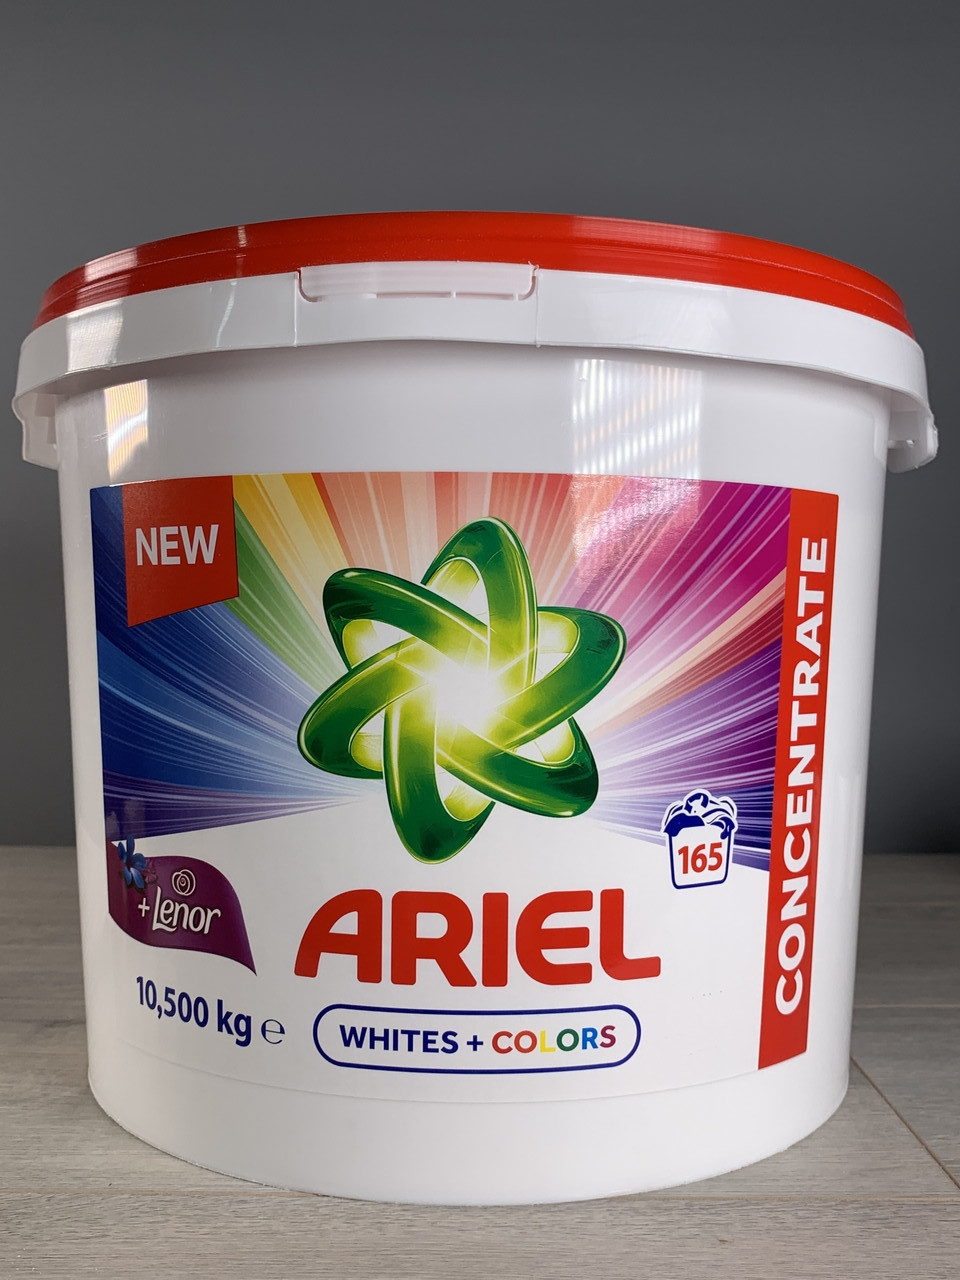 Пральний порошок ARIEL WHITES+COLORS (+Lenor) 10,500 КГ 165 прань